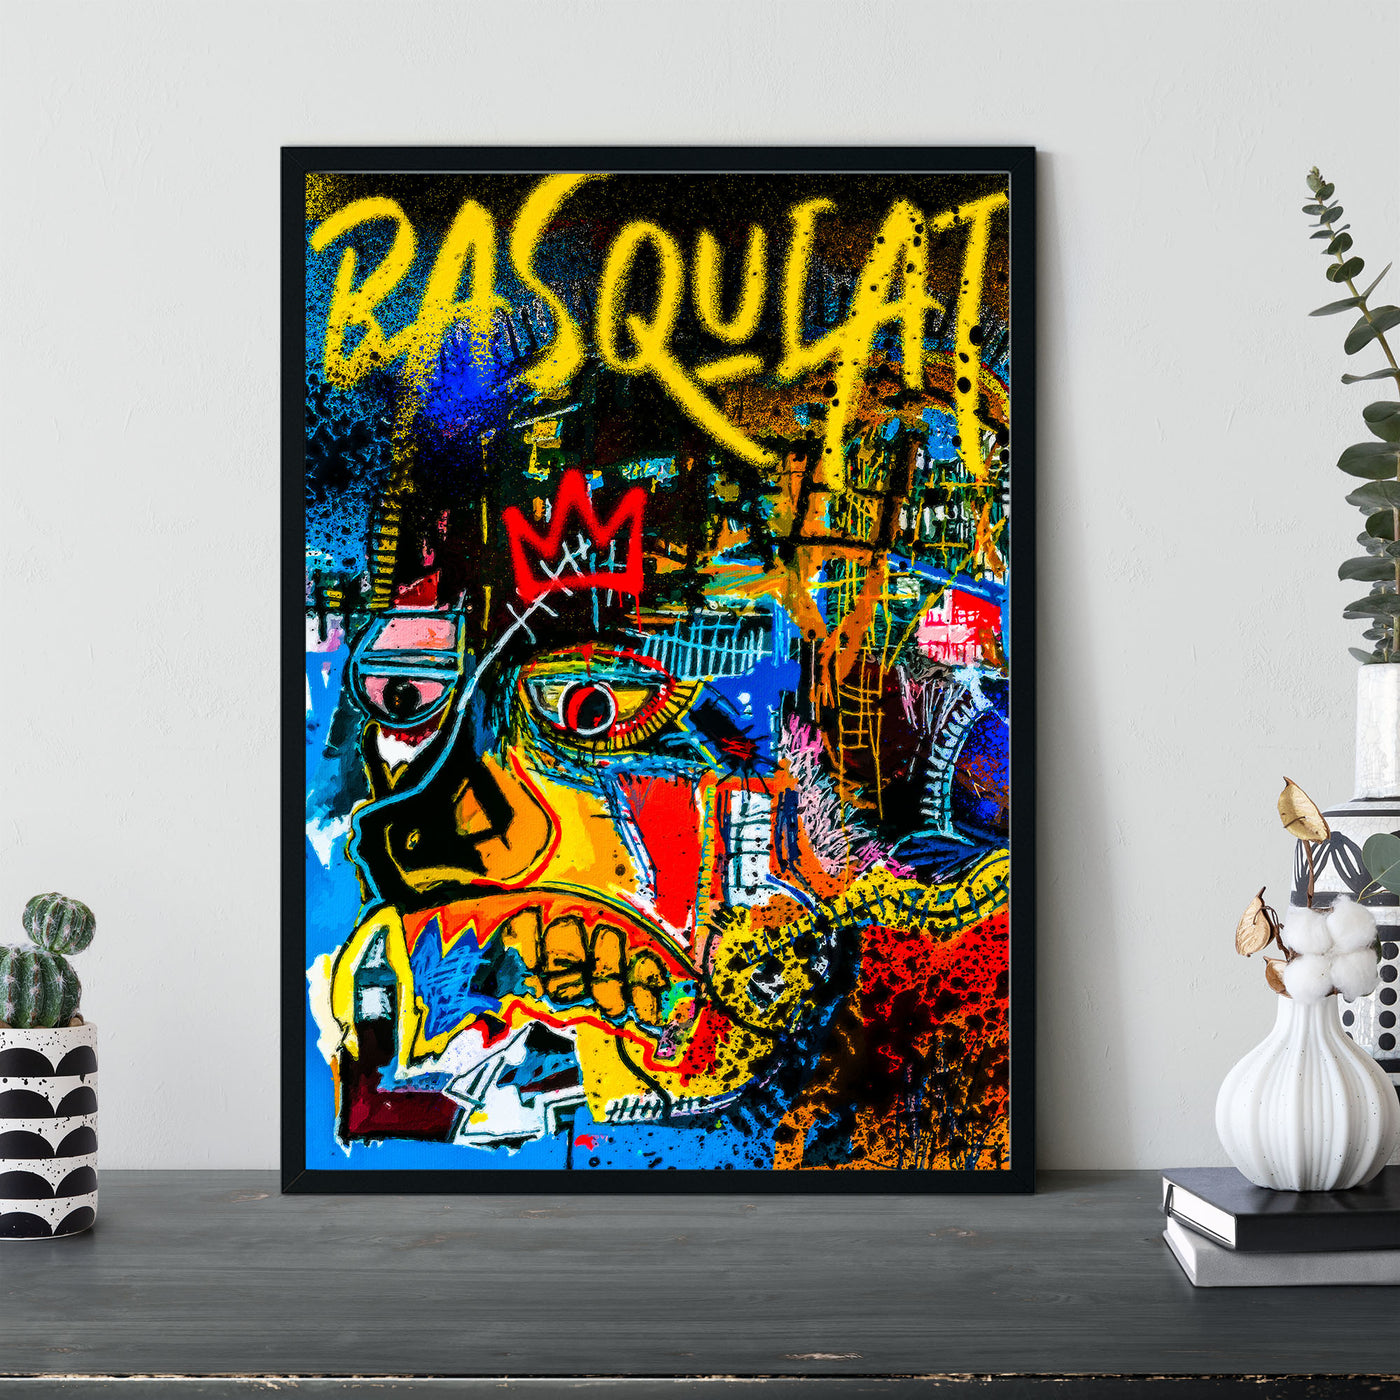 Jean Michel Basquiat Pop Art #13